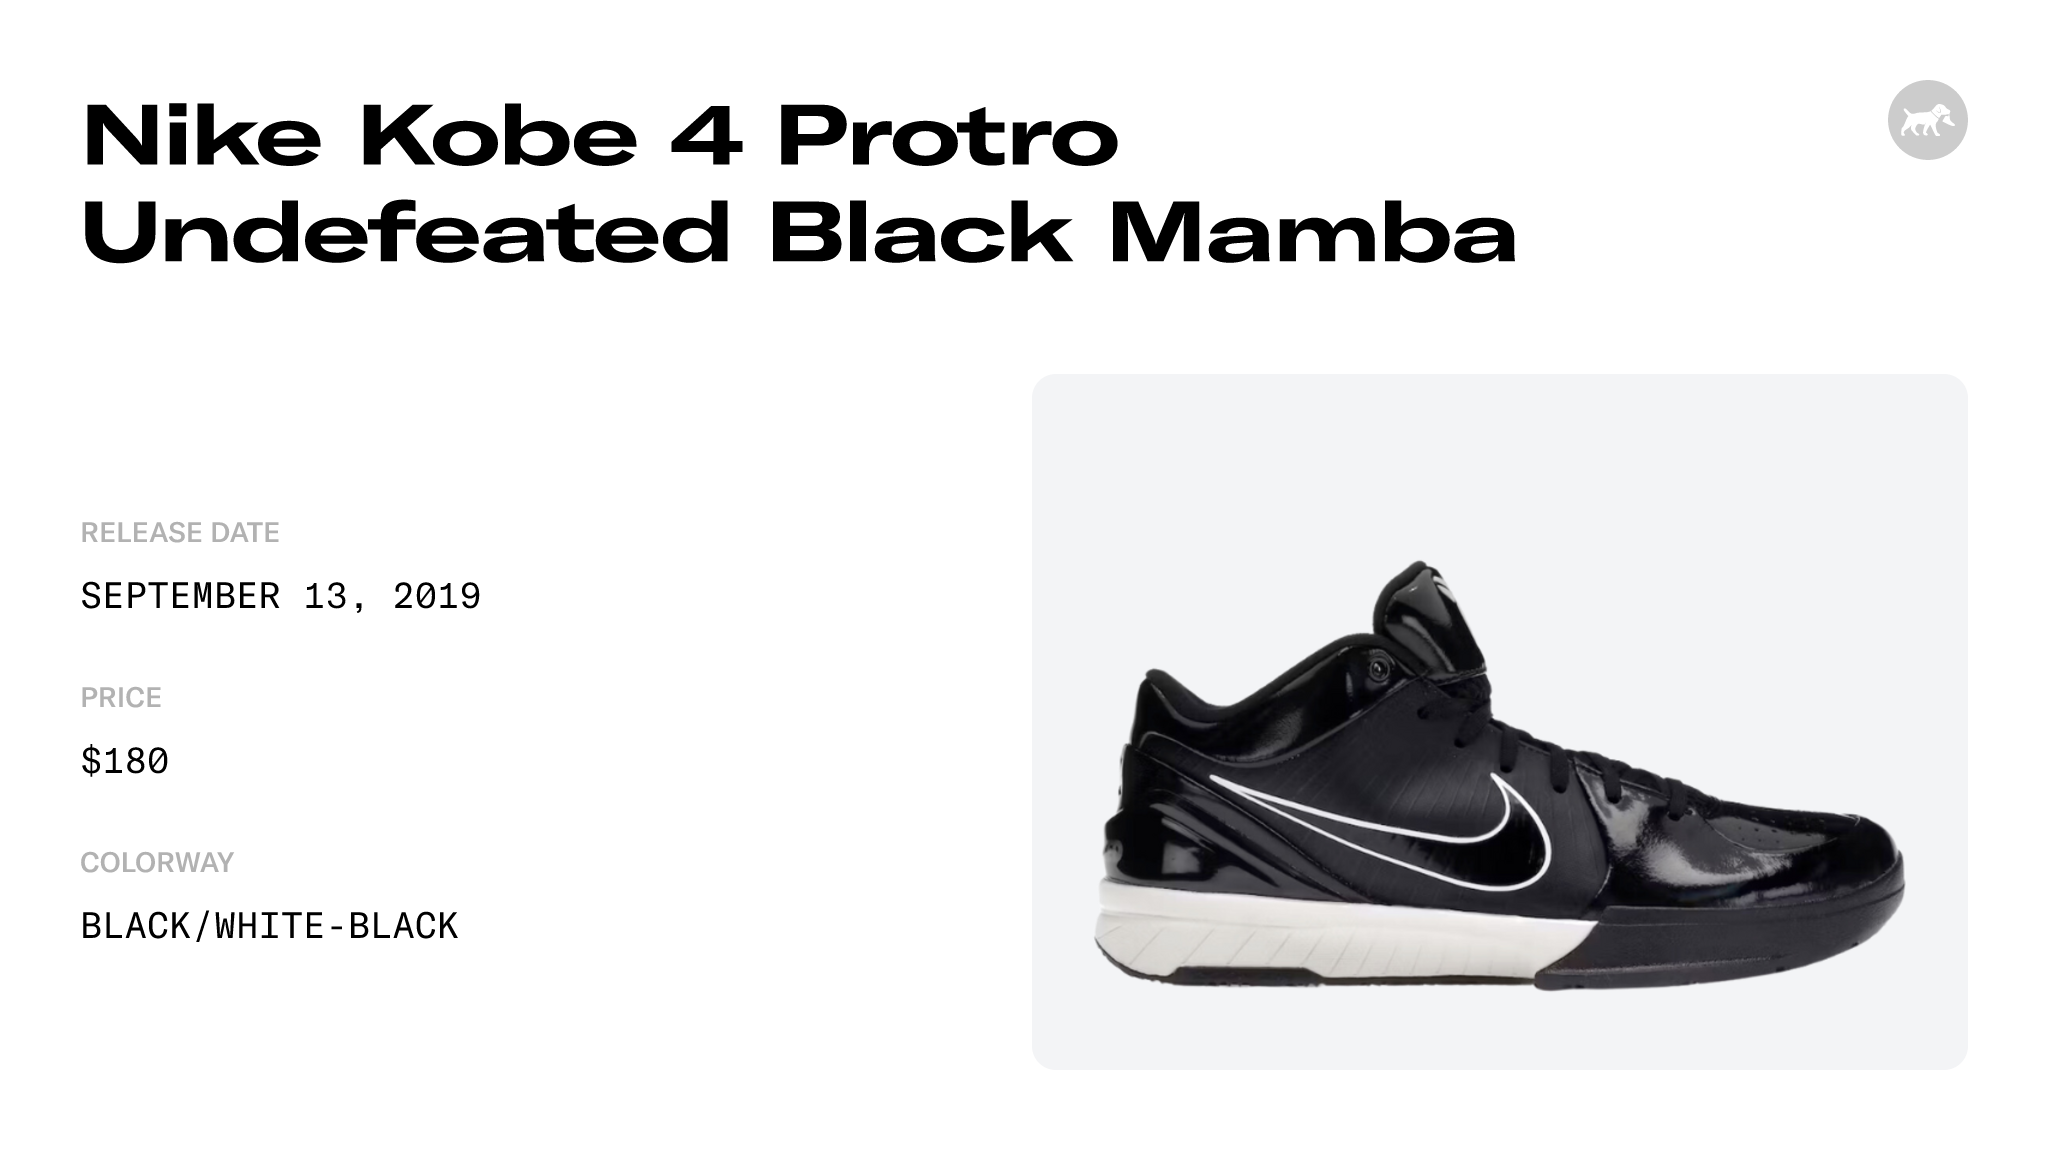 Nike Kobe 4 Protro Undefeated Black Mamba - CQ3869-001 Raffles and Release  Date